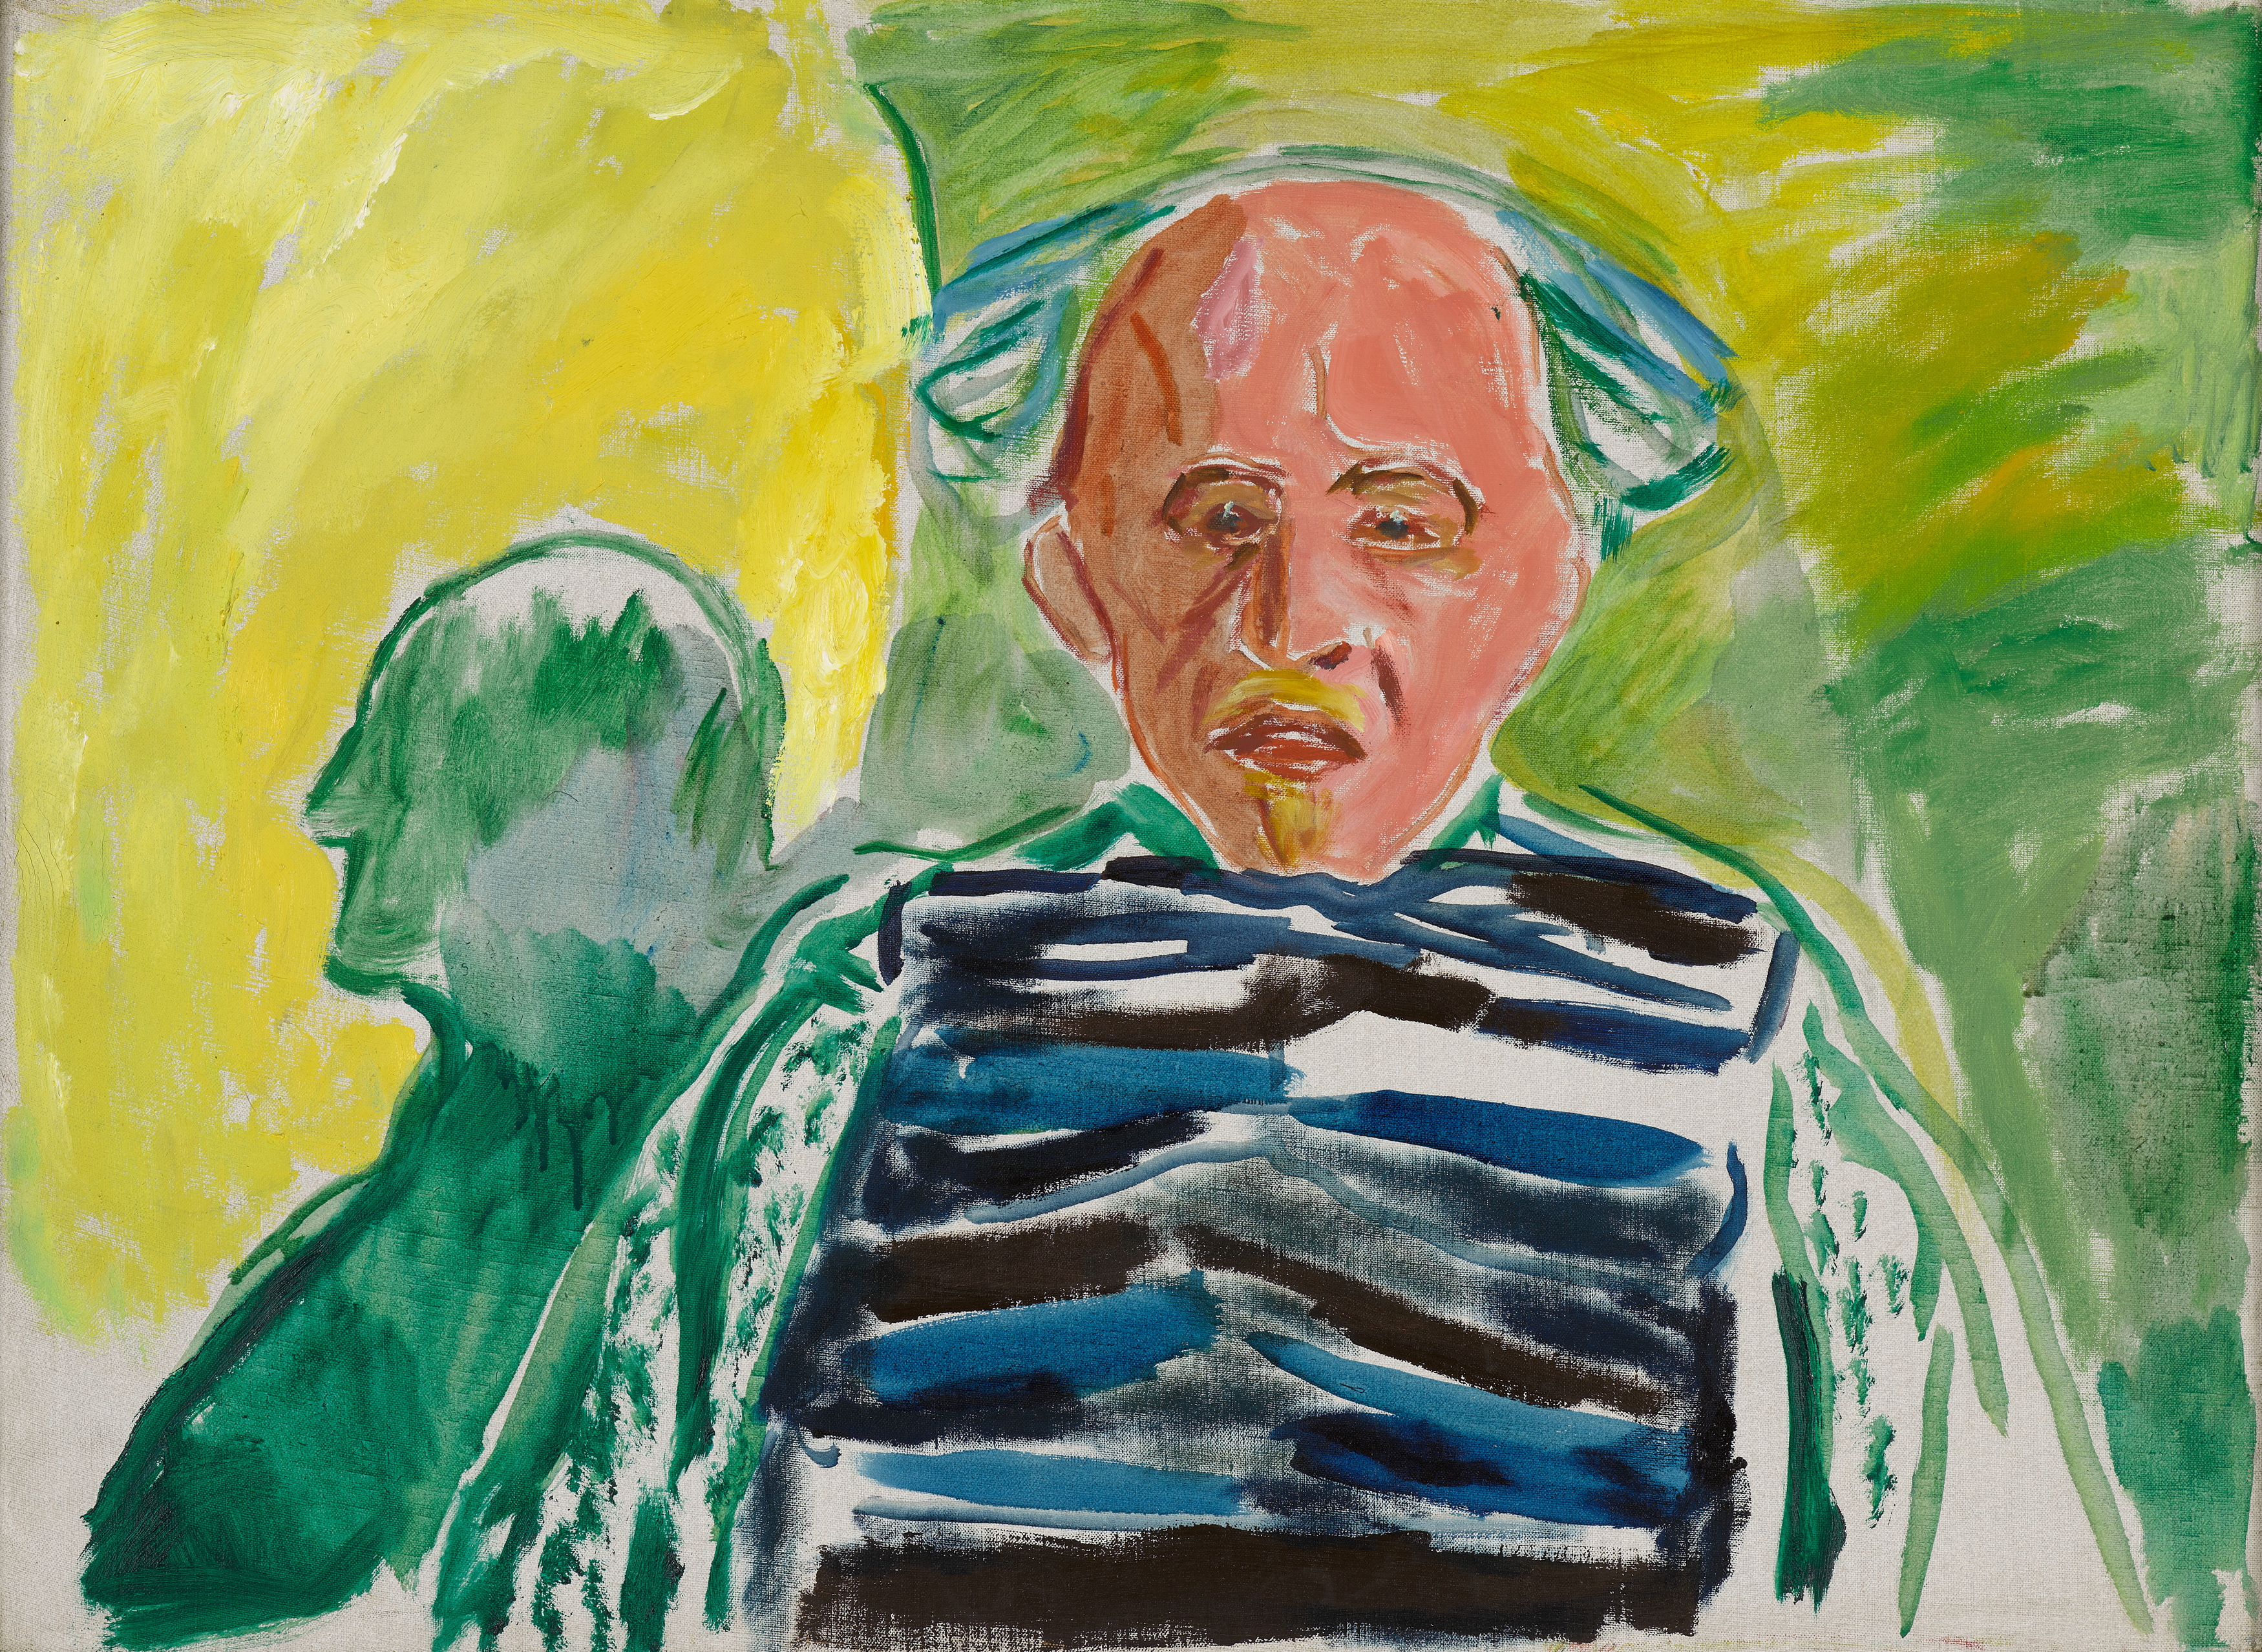  Edvard Munch: Self-Portrait. Oil on canvas, 1940–43. Photo © Munchmuseet